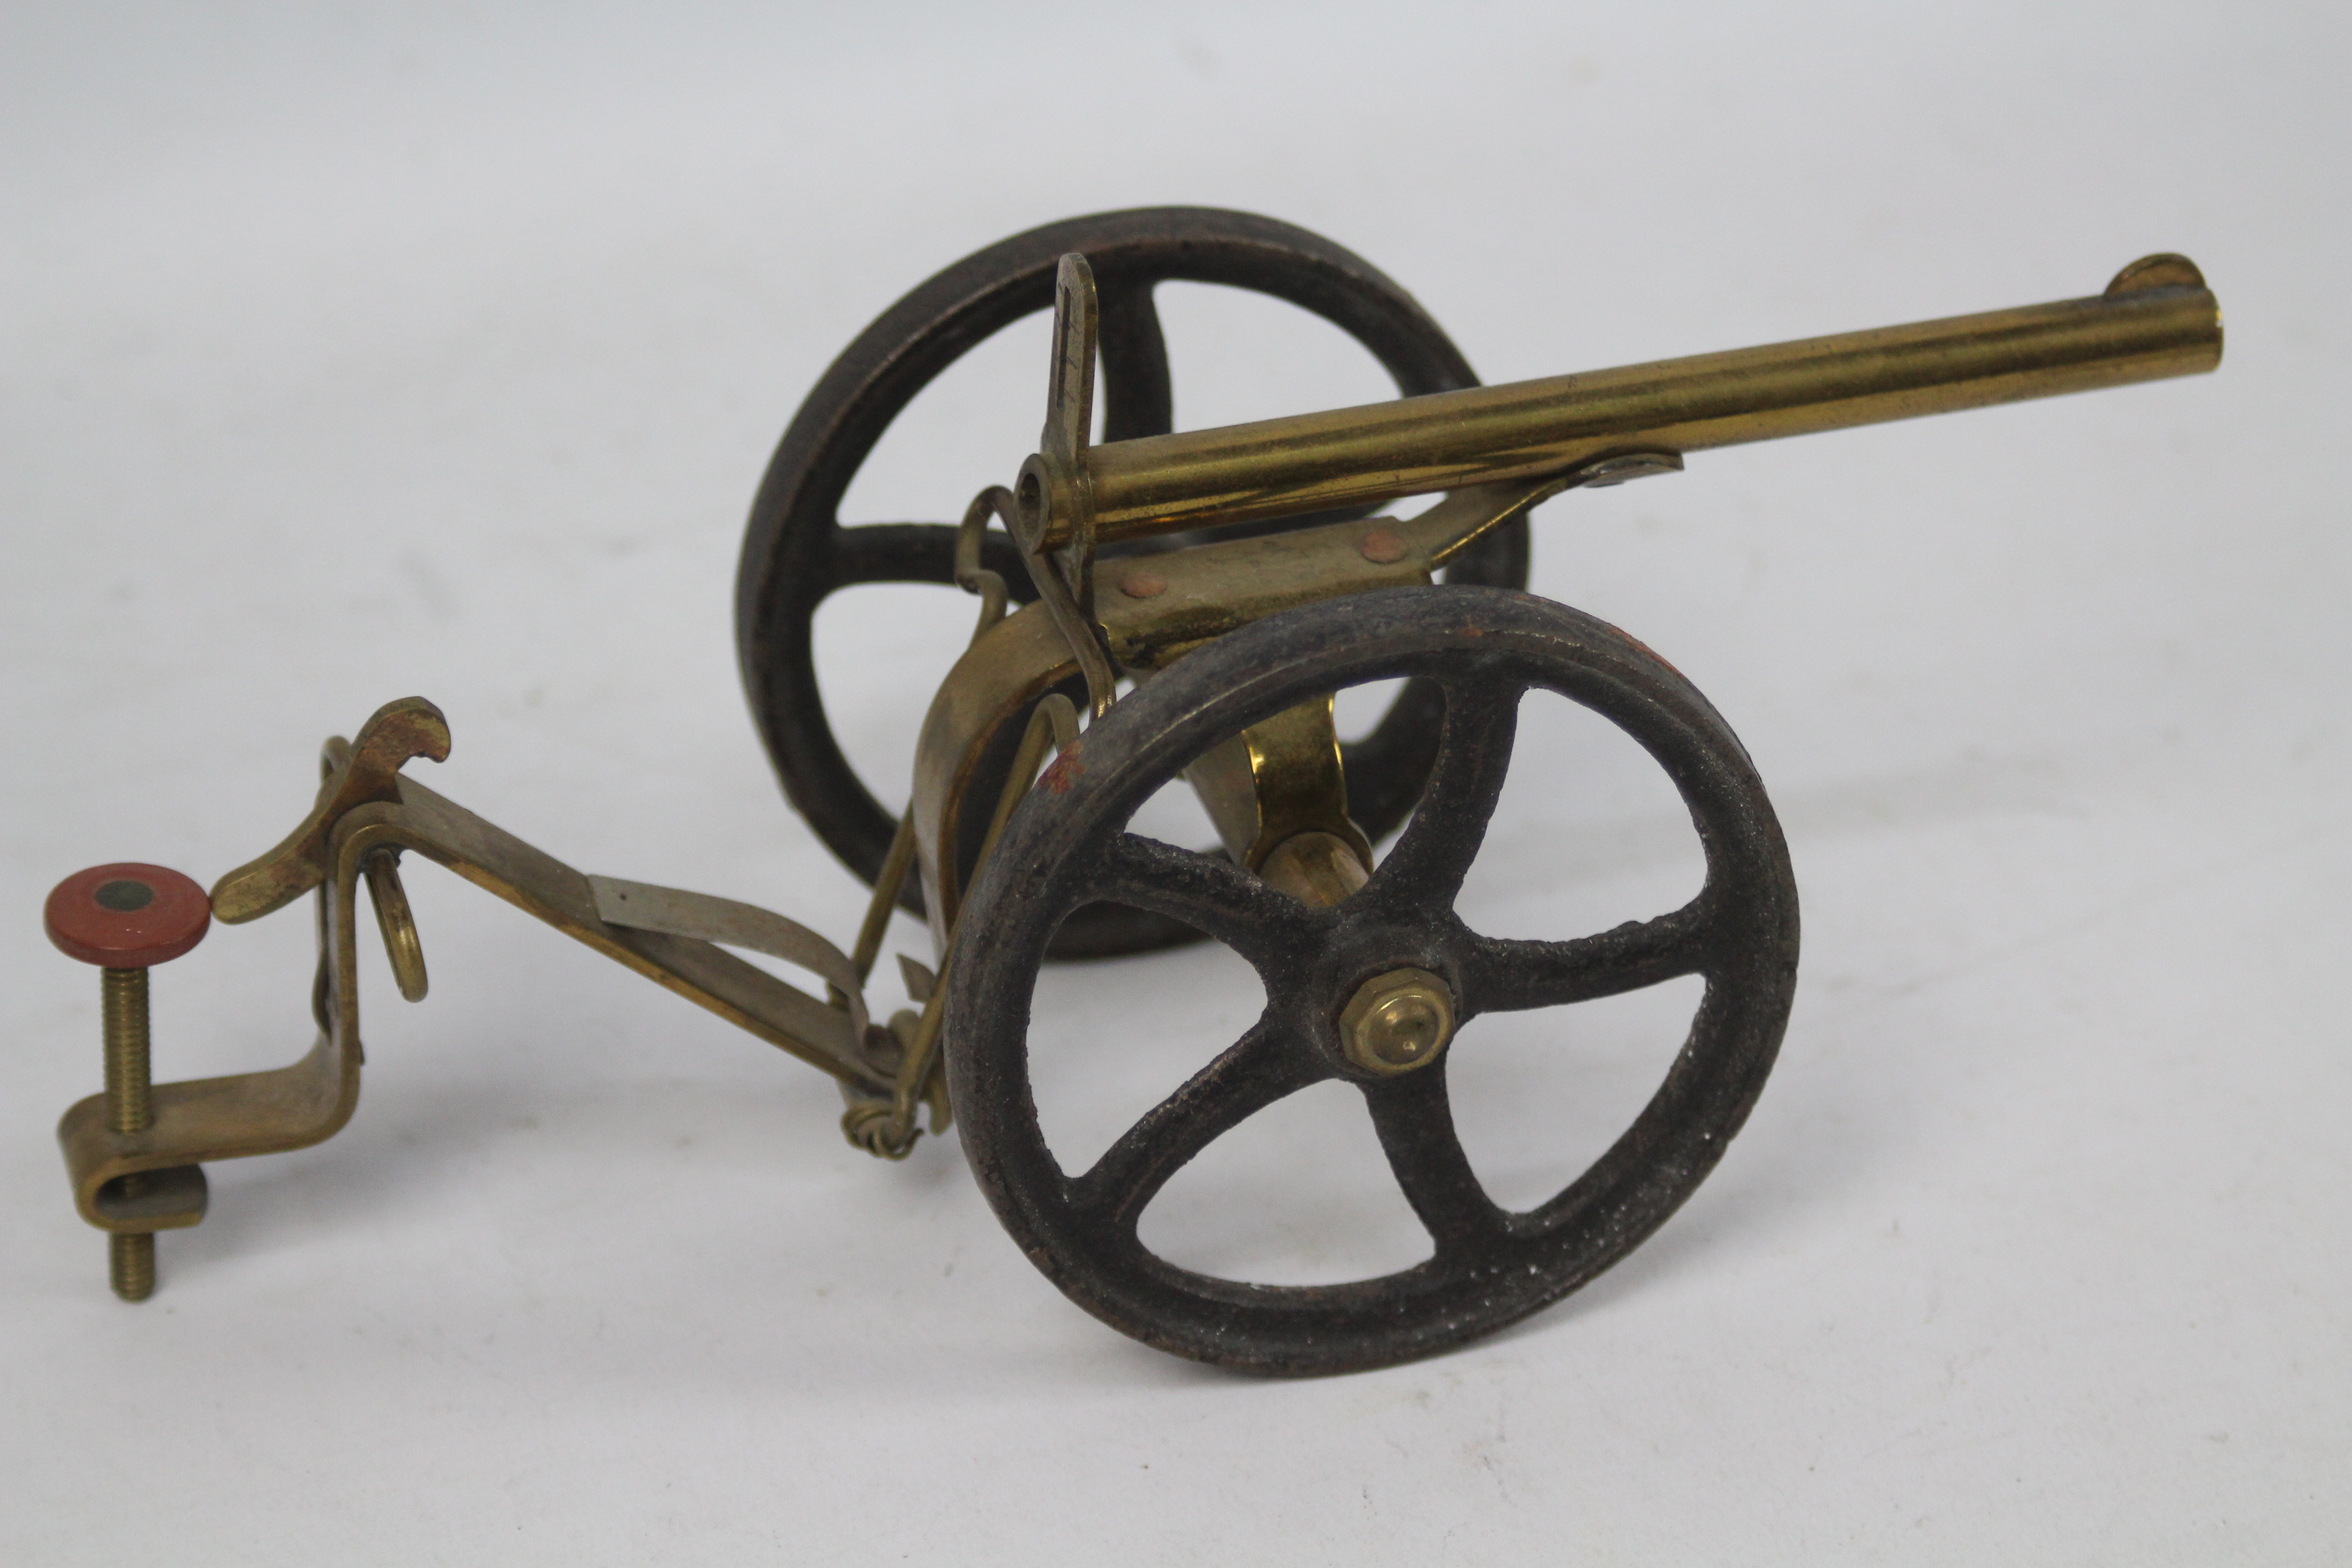 Lambton Parlour Game - a model Lambton Cannon / Gun with original box, - Image 4 of 5